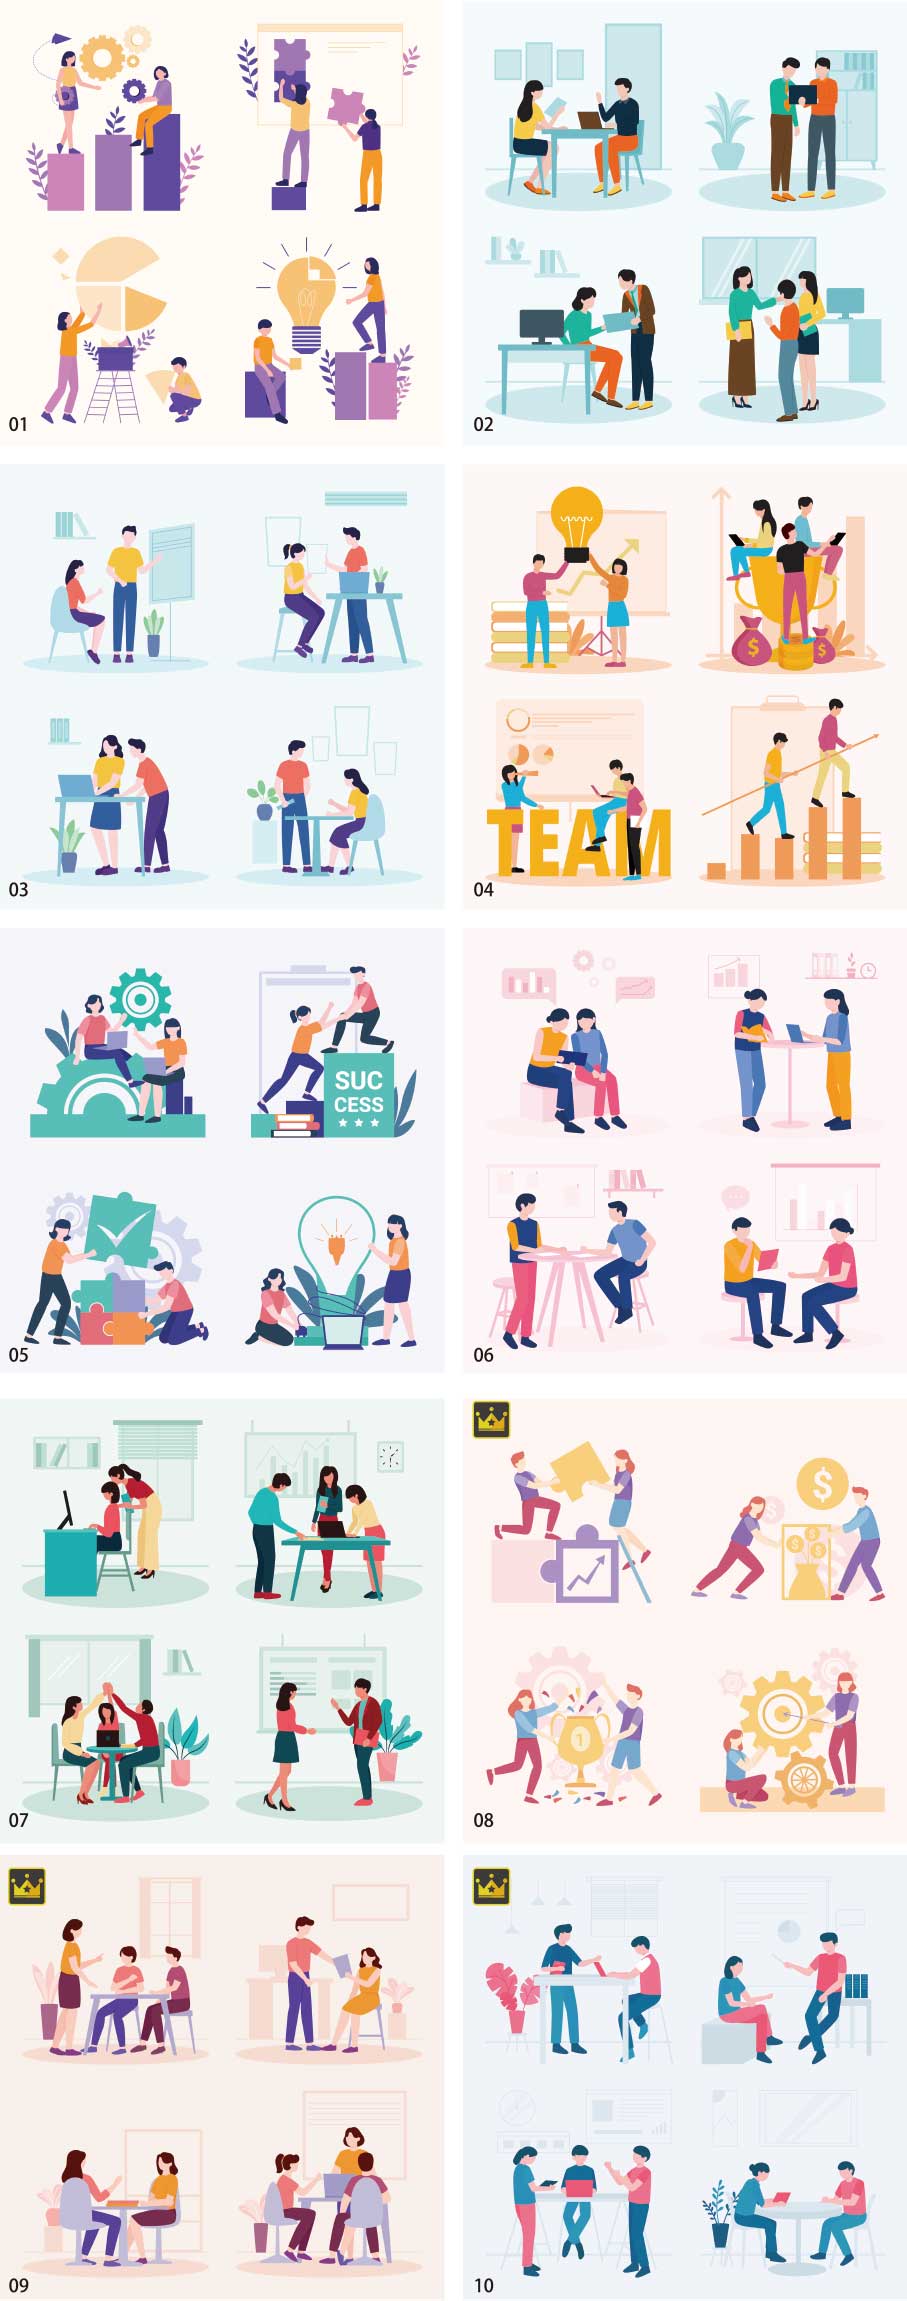 Teamwork illustration collection